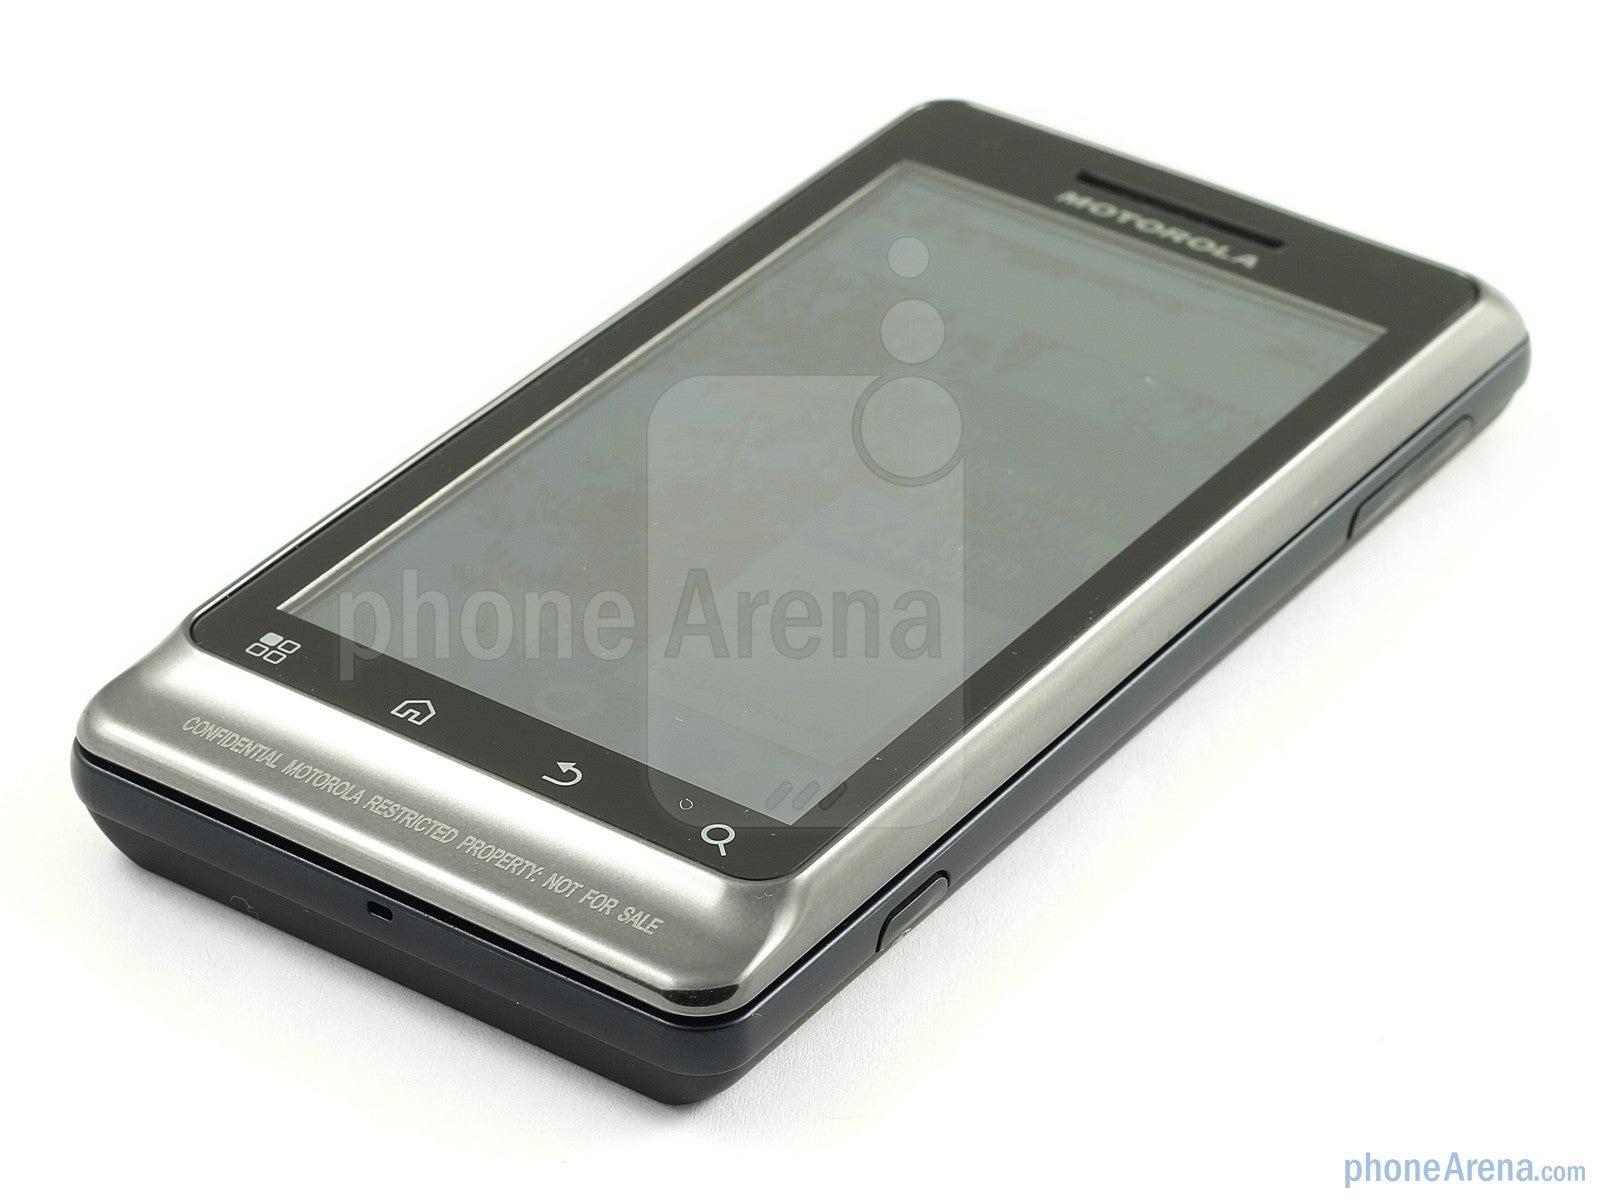 The phone has a 3.7 inch display - Motorola MILESTONE 2 Review